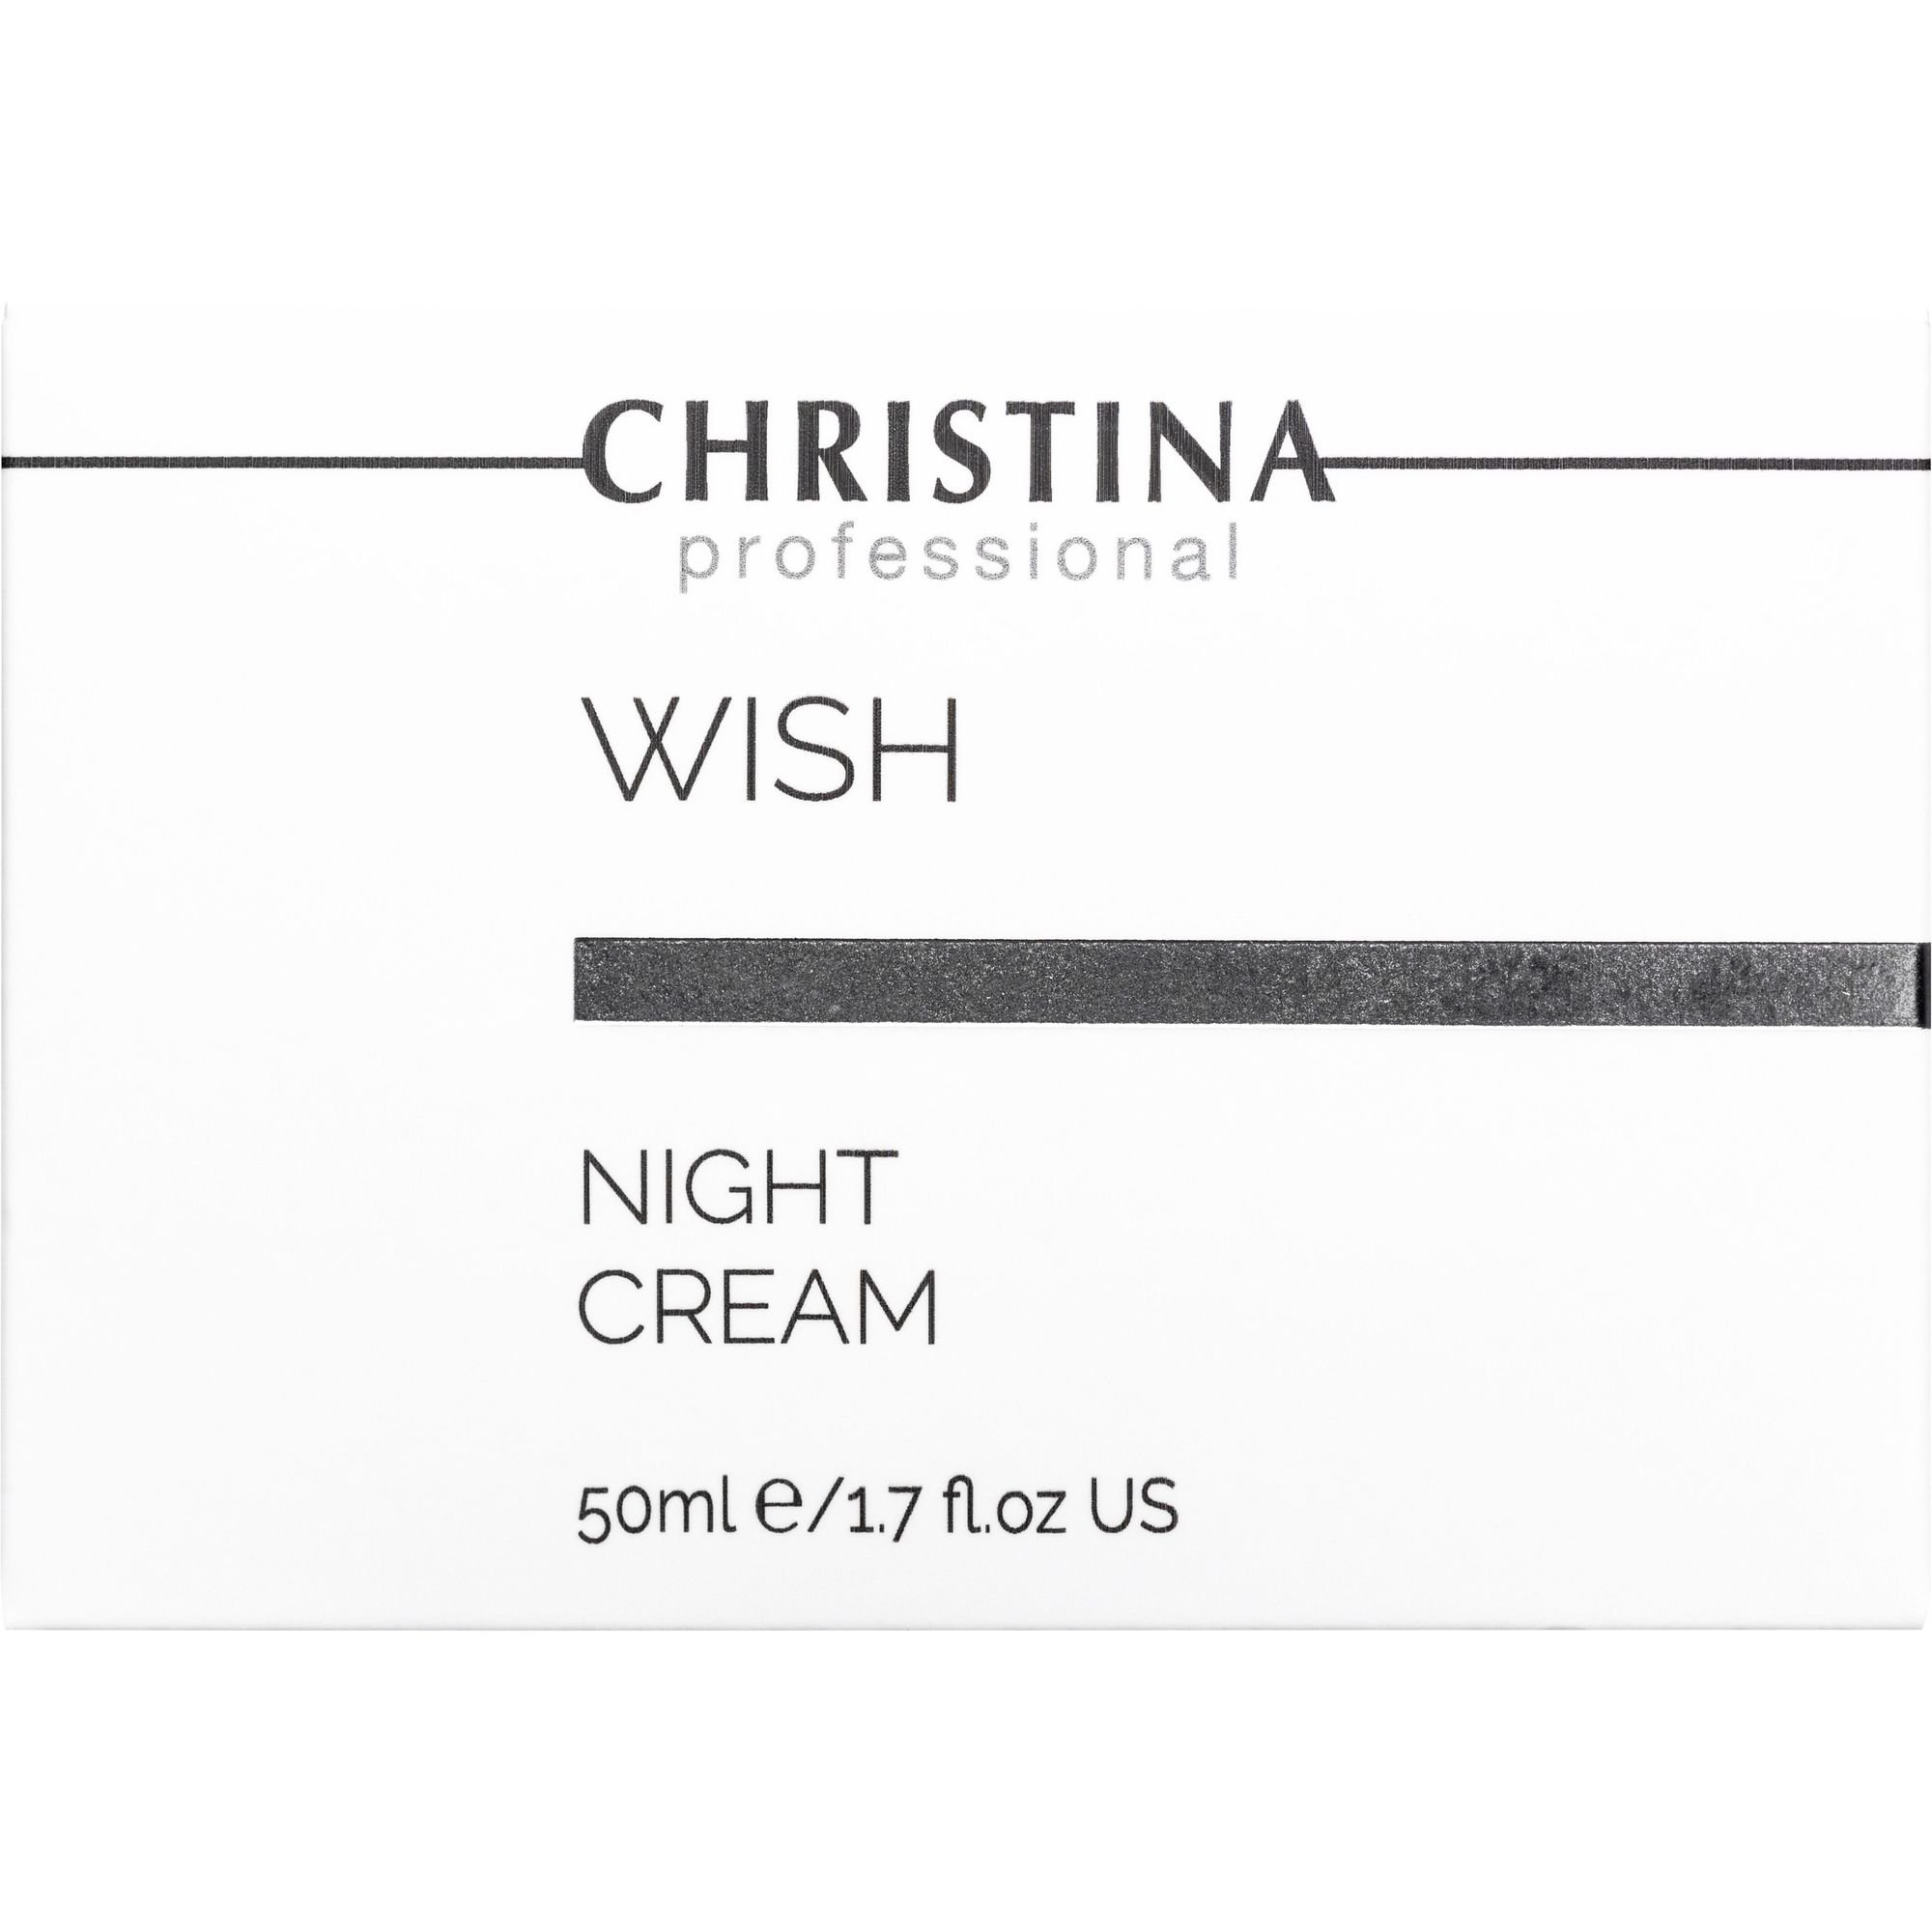 Нічний крем Christina Wish Night Cream 50 мл - фото 4